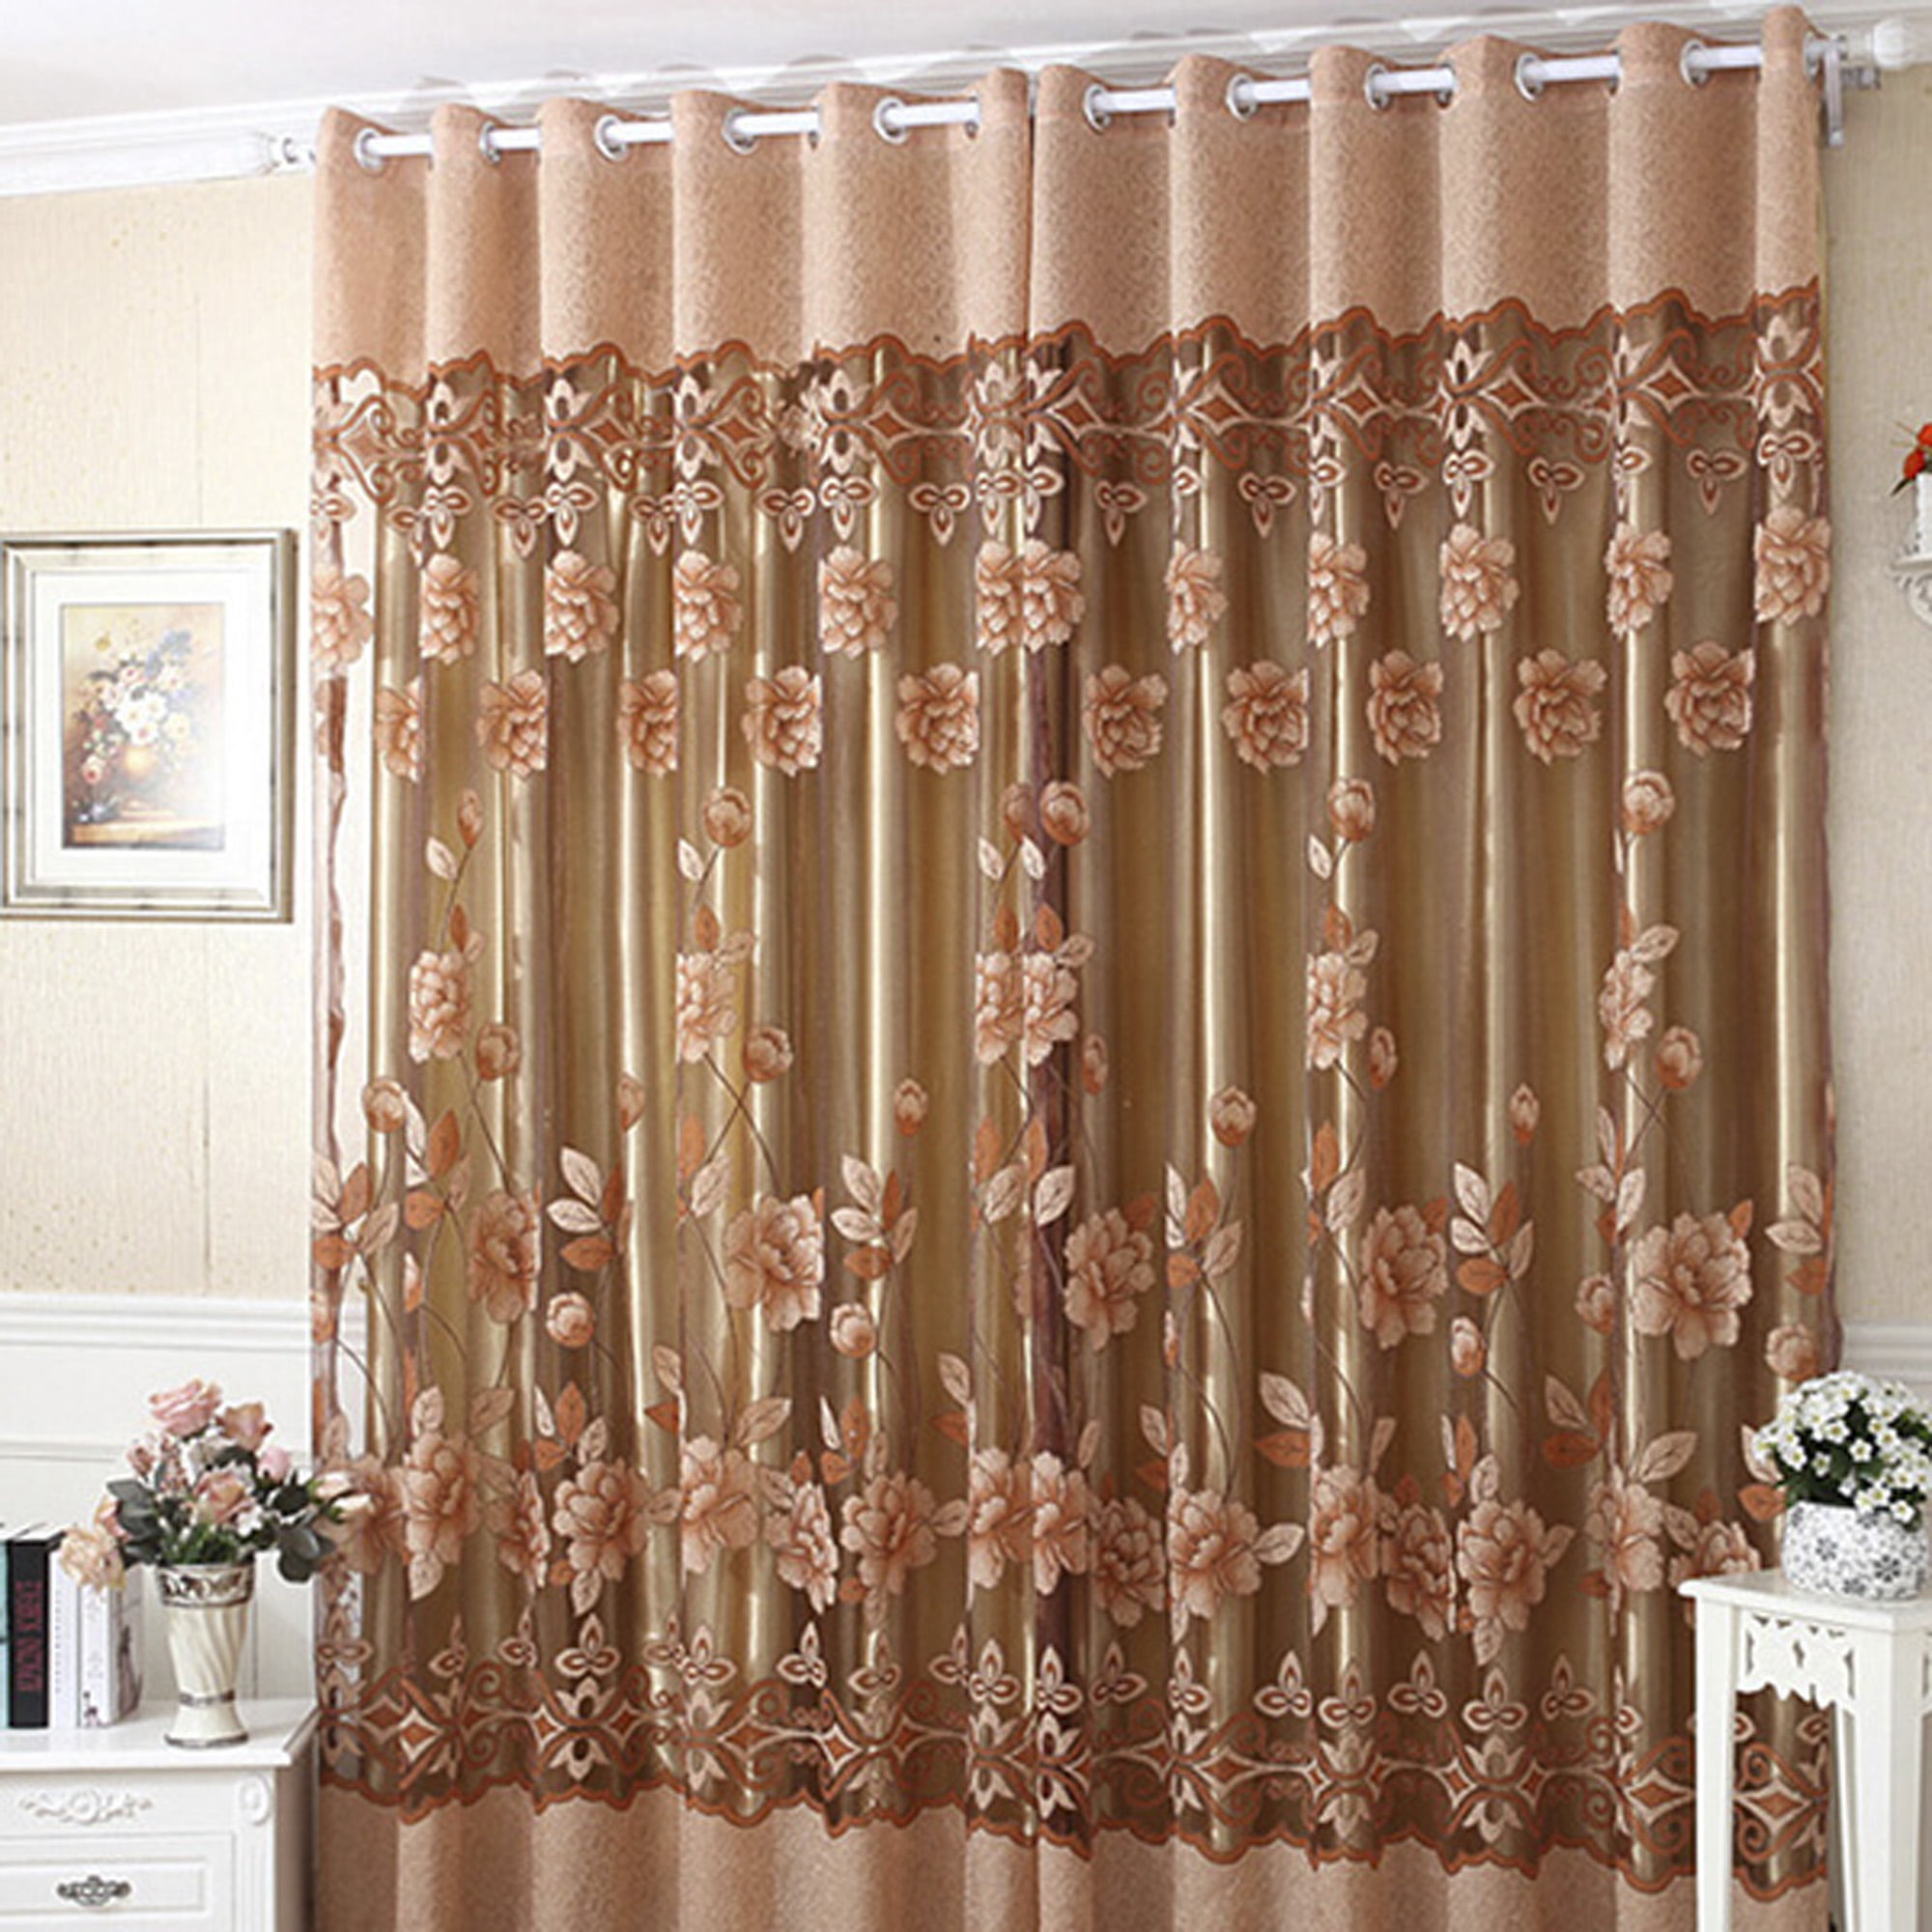 Pcs Luxury Elegant Sheer Curtains L, Stylish Living Room Curtains